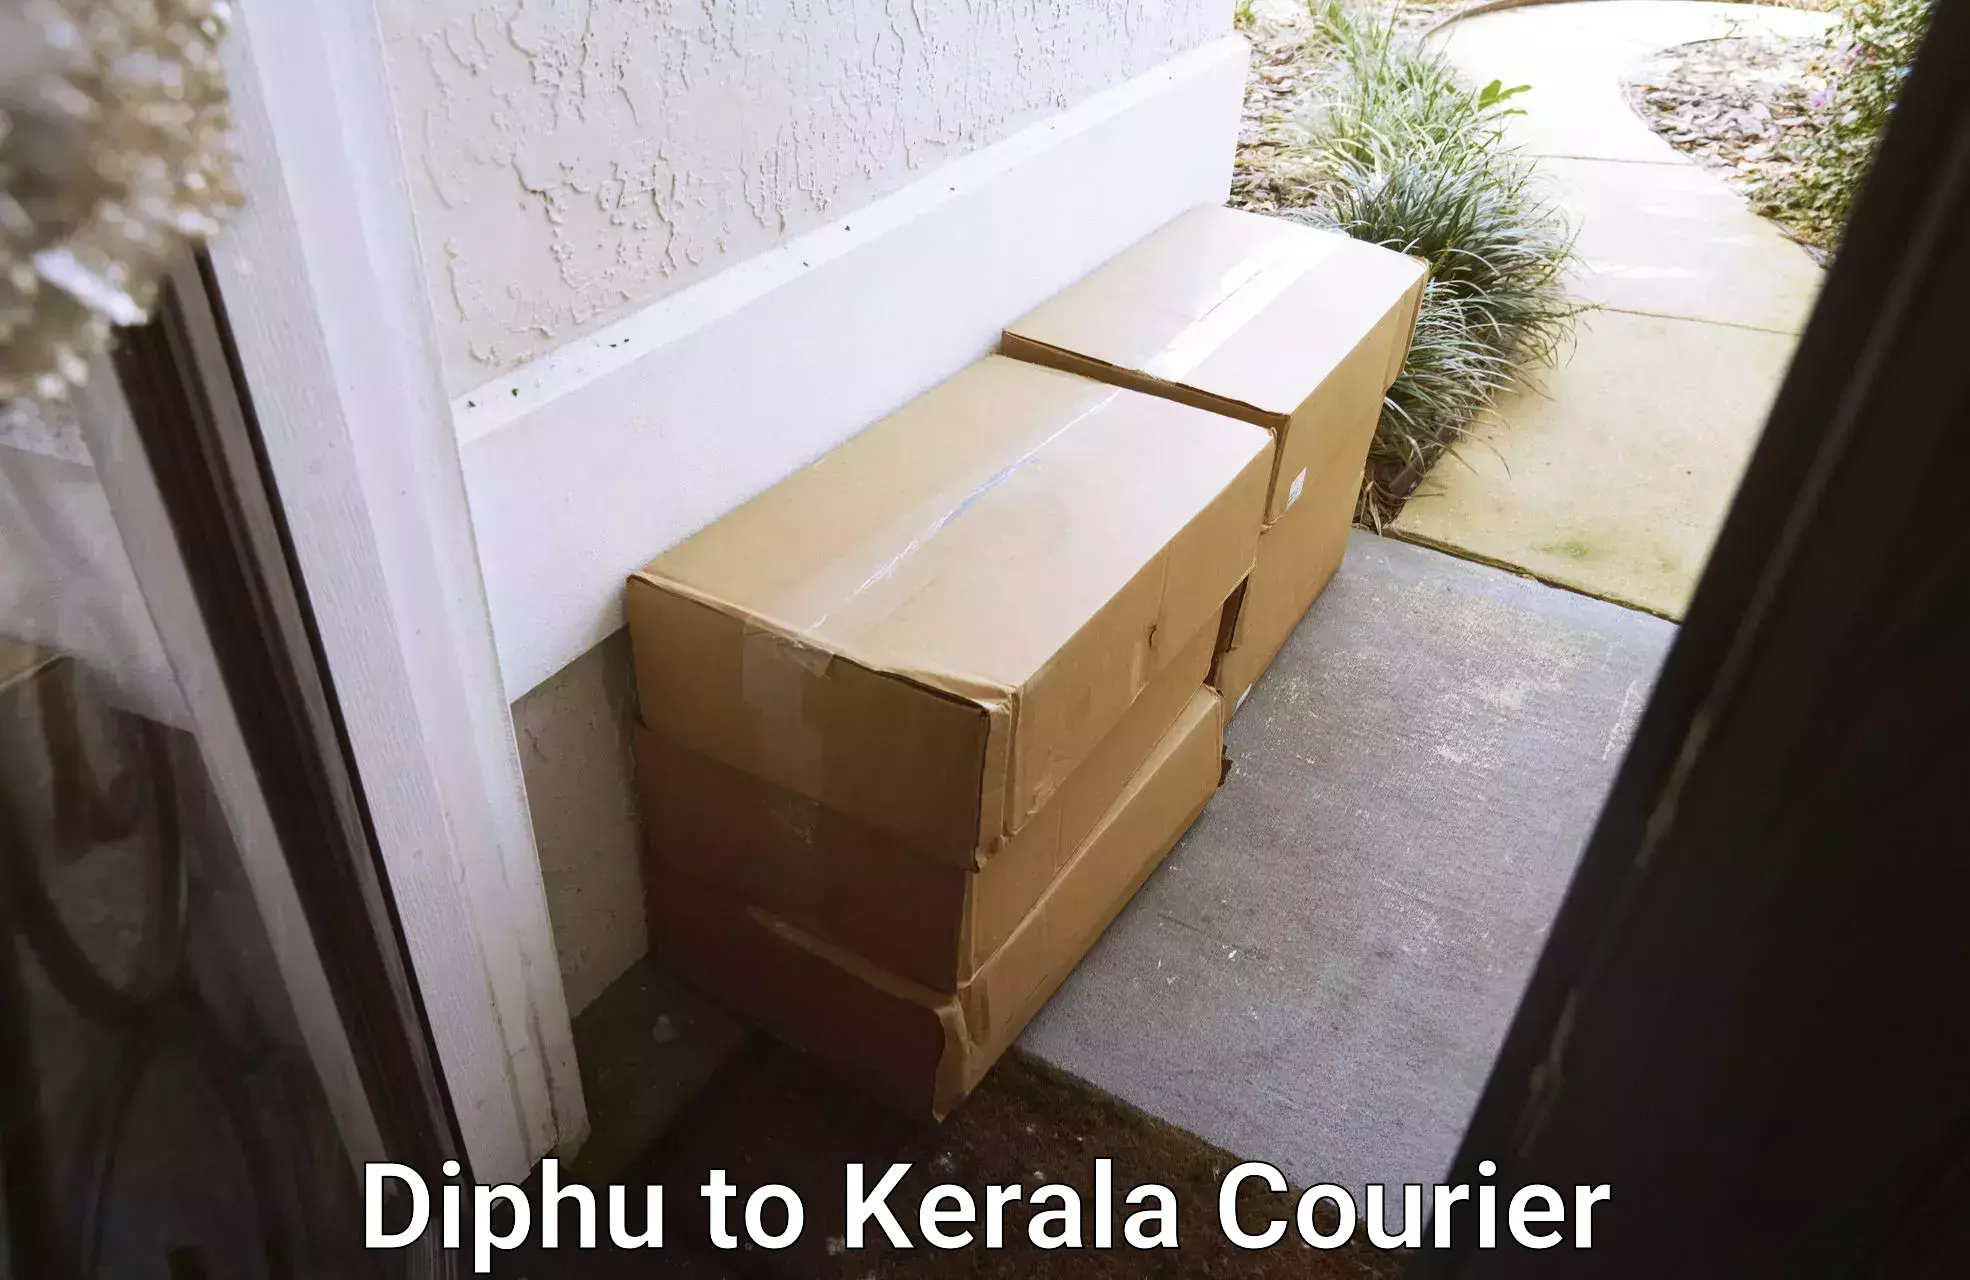 High-capacity parcel service Diphu to Kerala